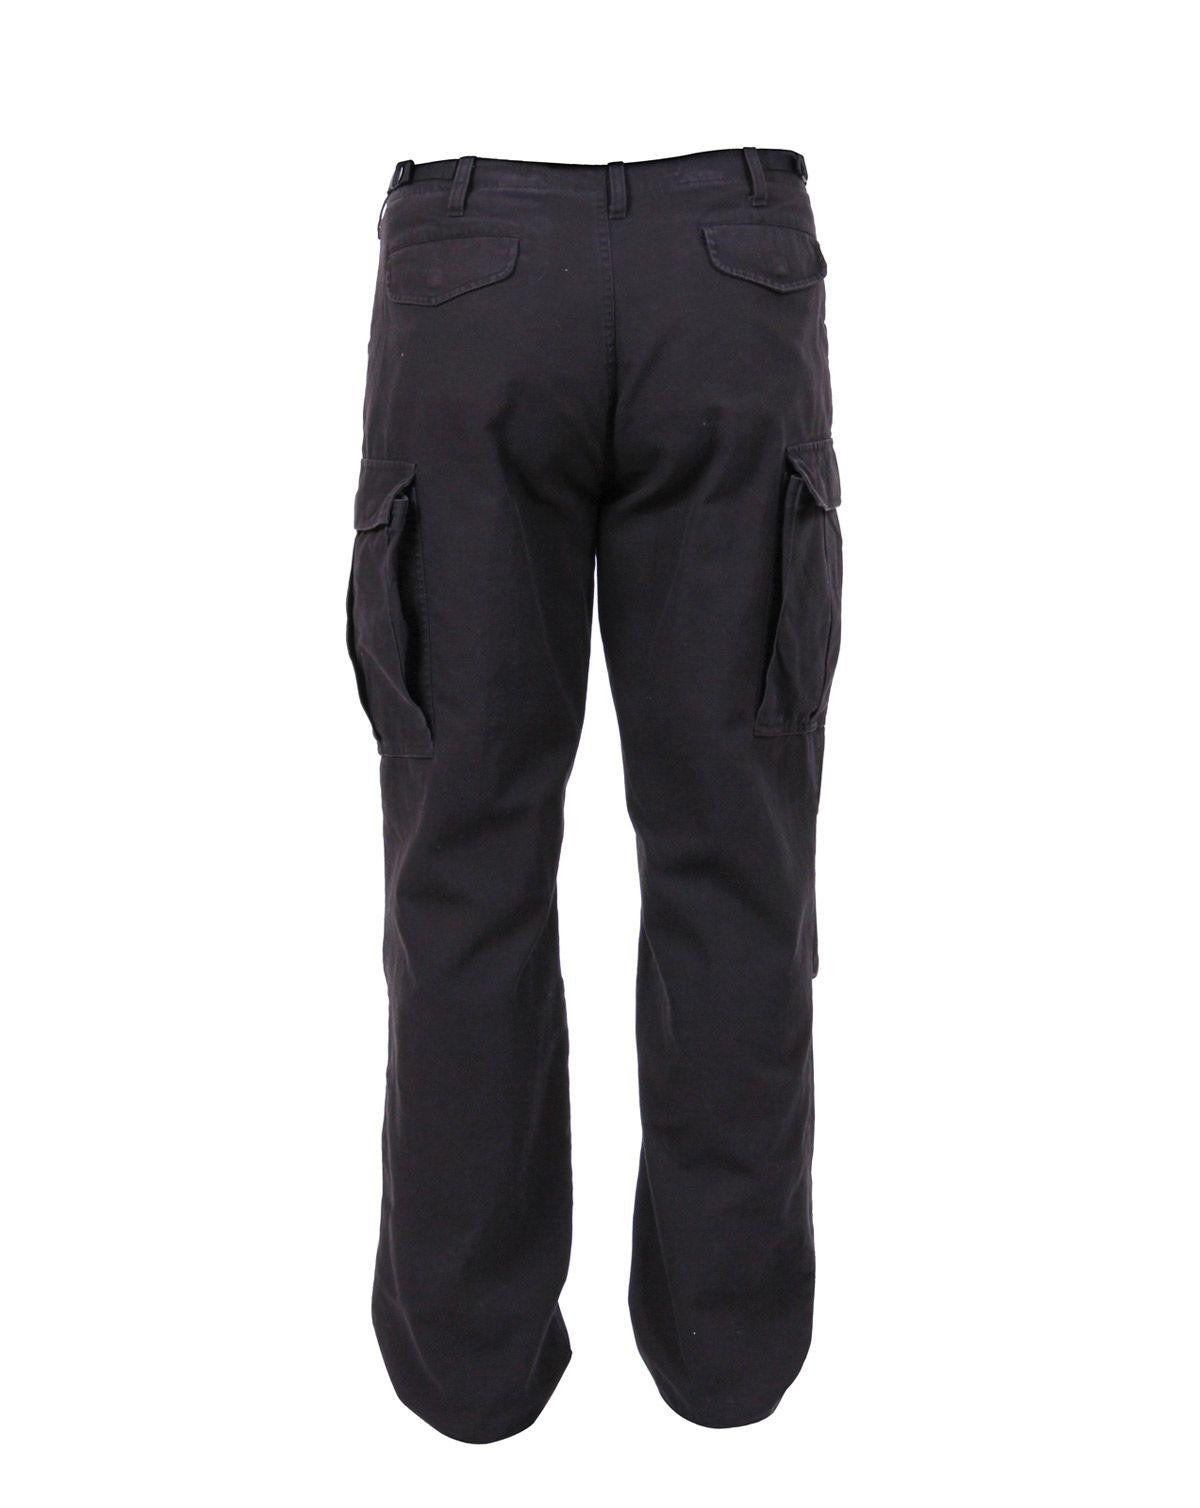 Buy Rothco Cargo Pants M65-Style | Money Back Guarantee | ARMY STAR